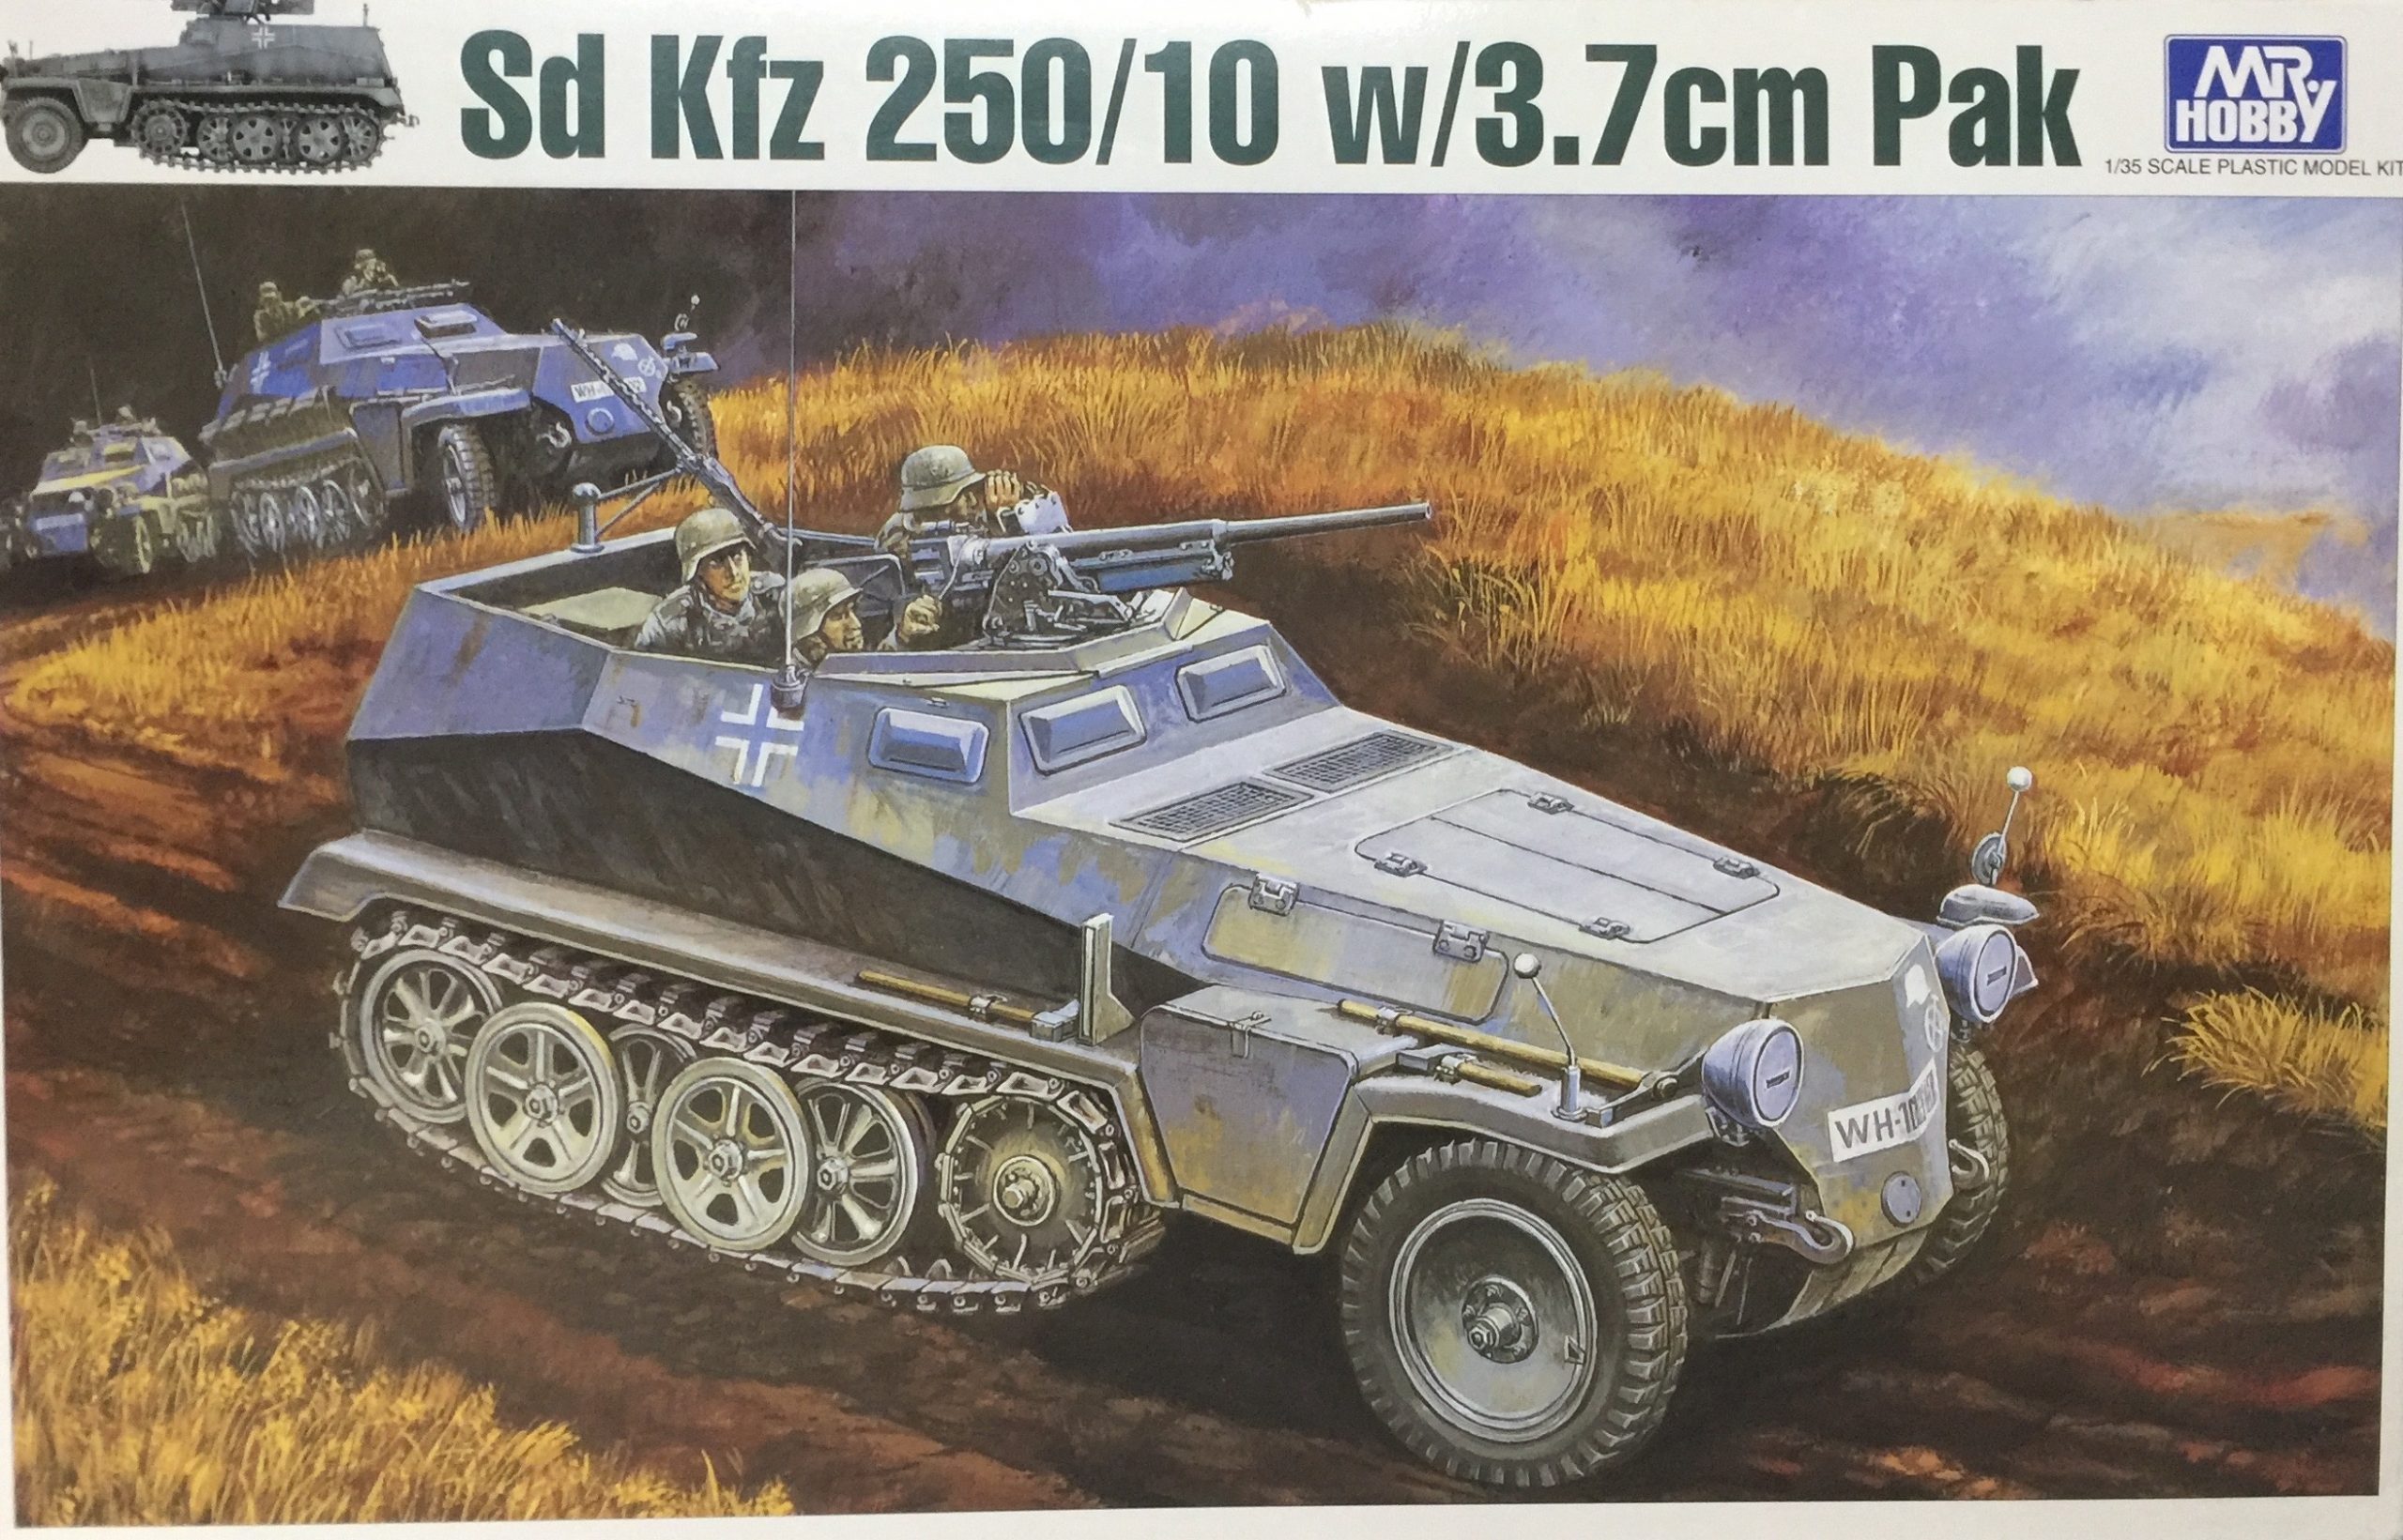 MR Hobby Sd Kfz 250/10 w/3.7cm Pak Ref 745 Escala 1/35